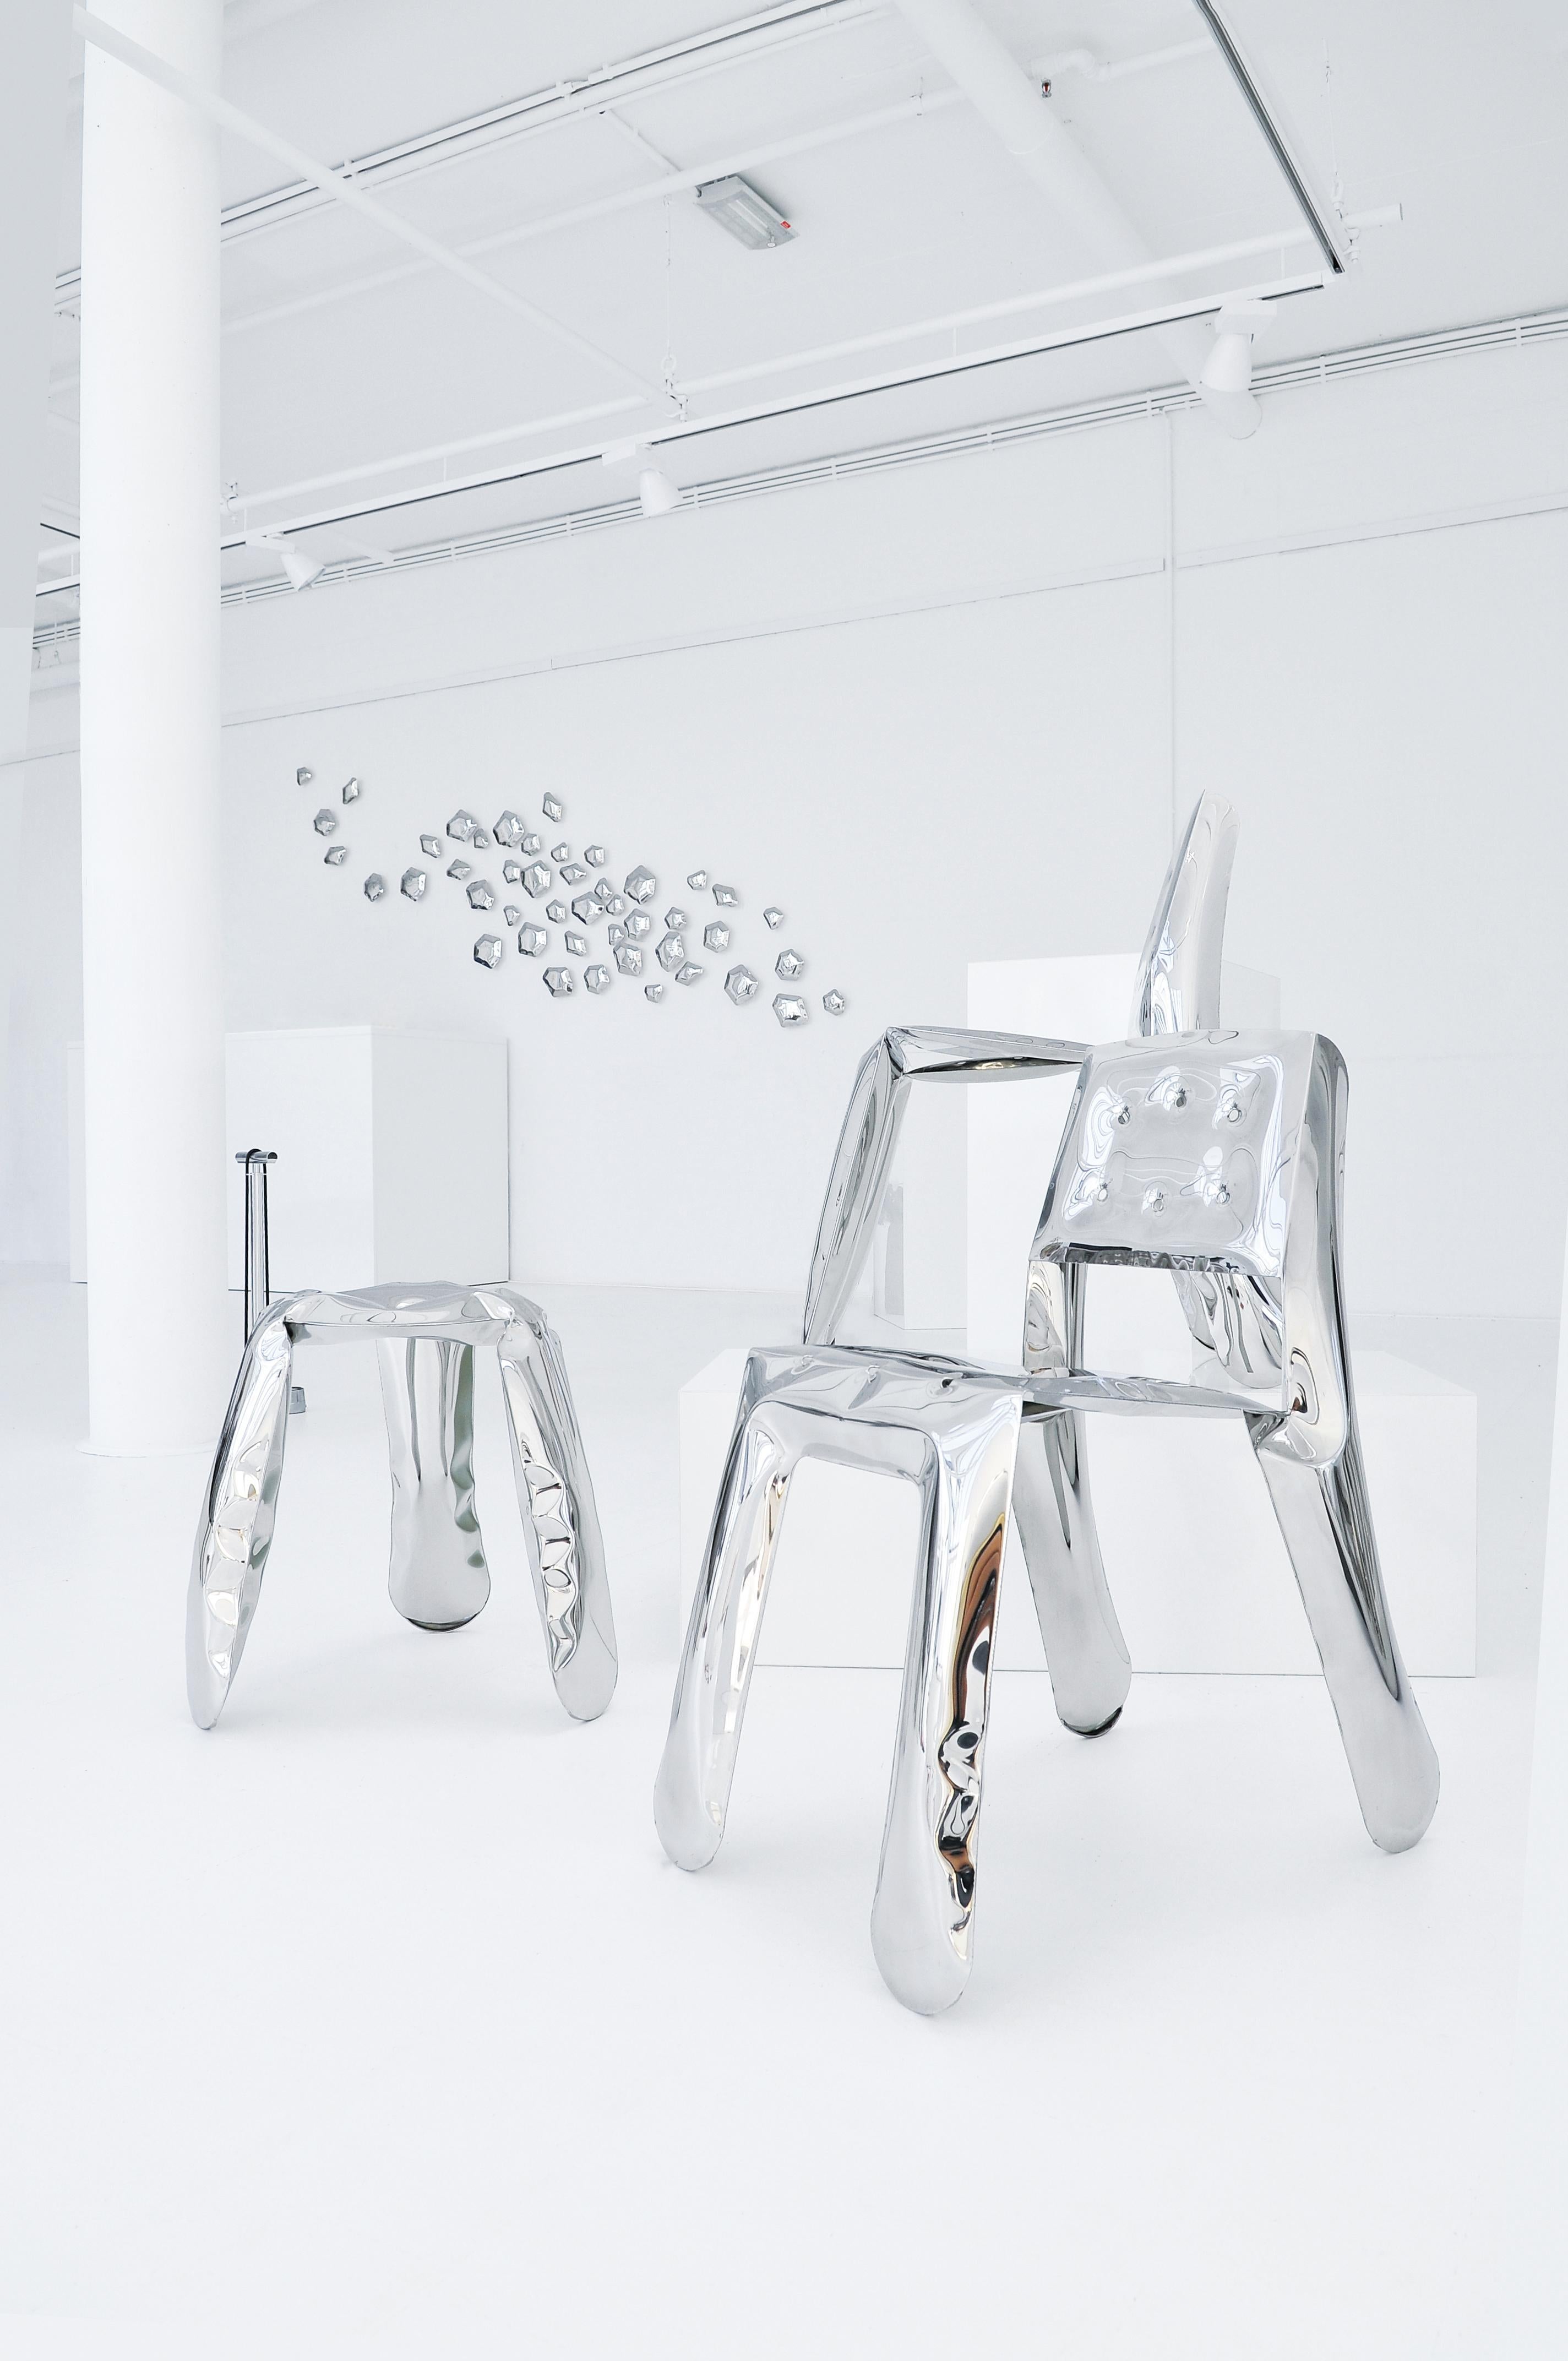 Stainless Steel Chippensteel 0.5 Sculptural Chair by Zieta 2